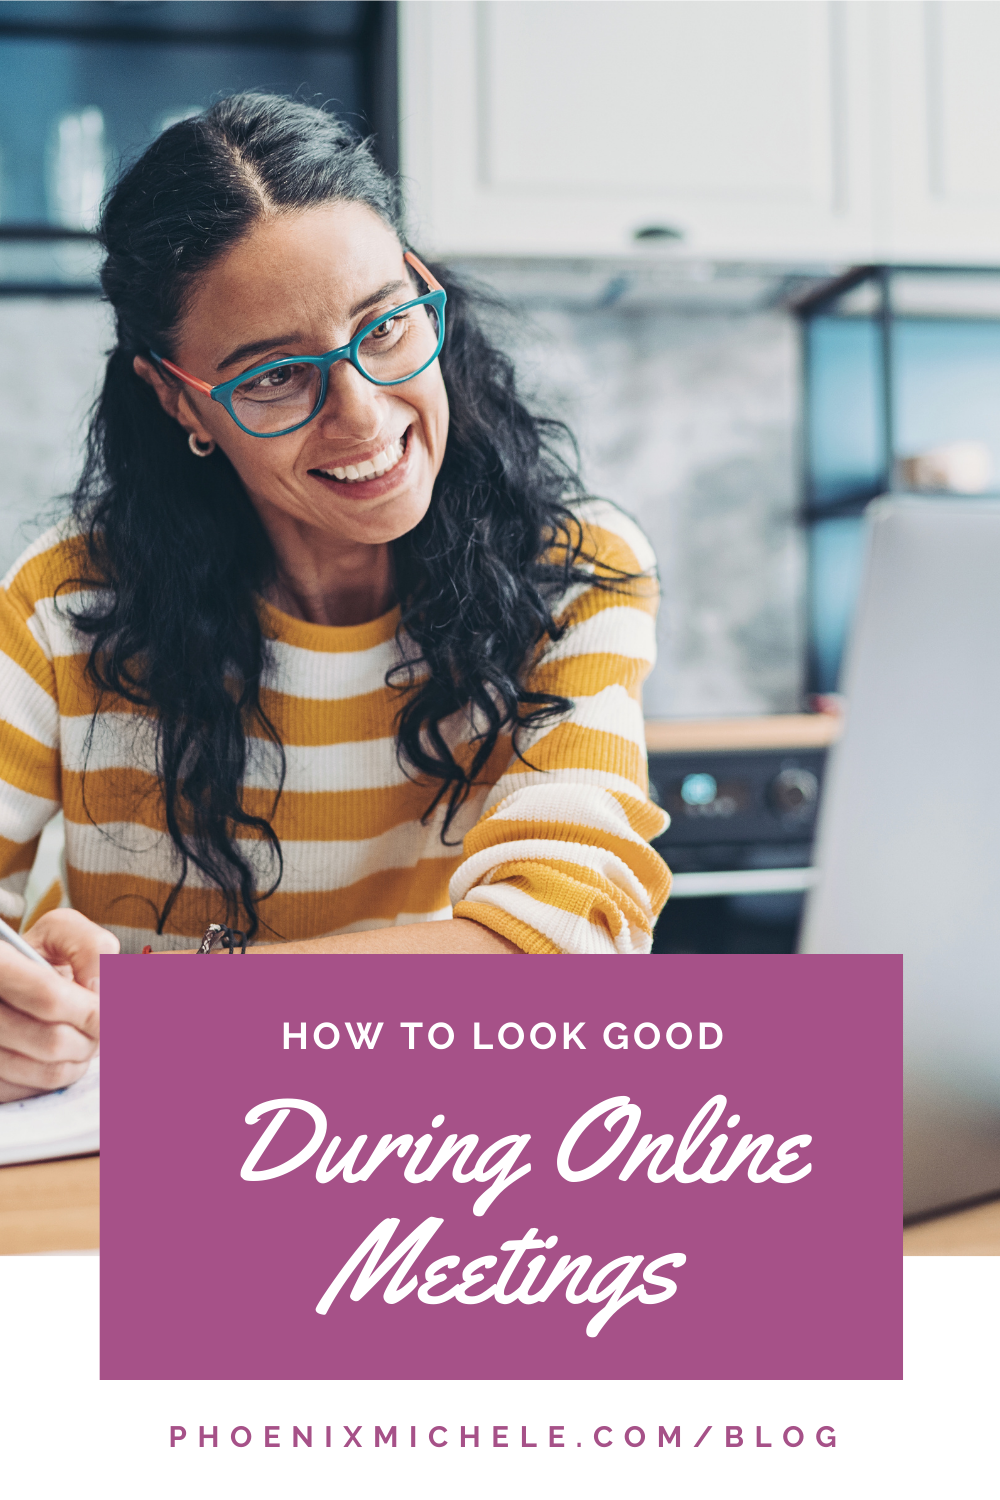 How to Look Good During Online Meetings